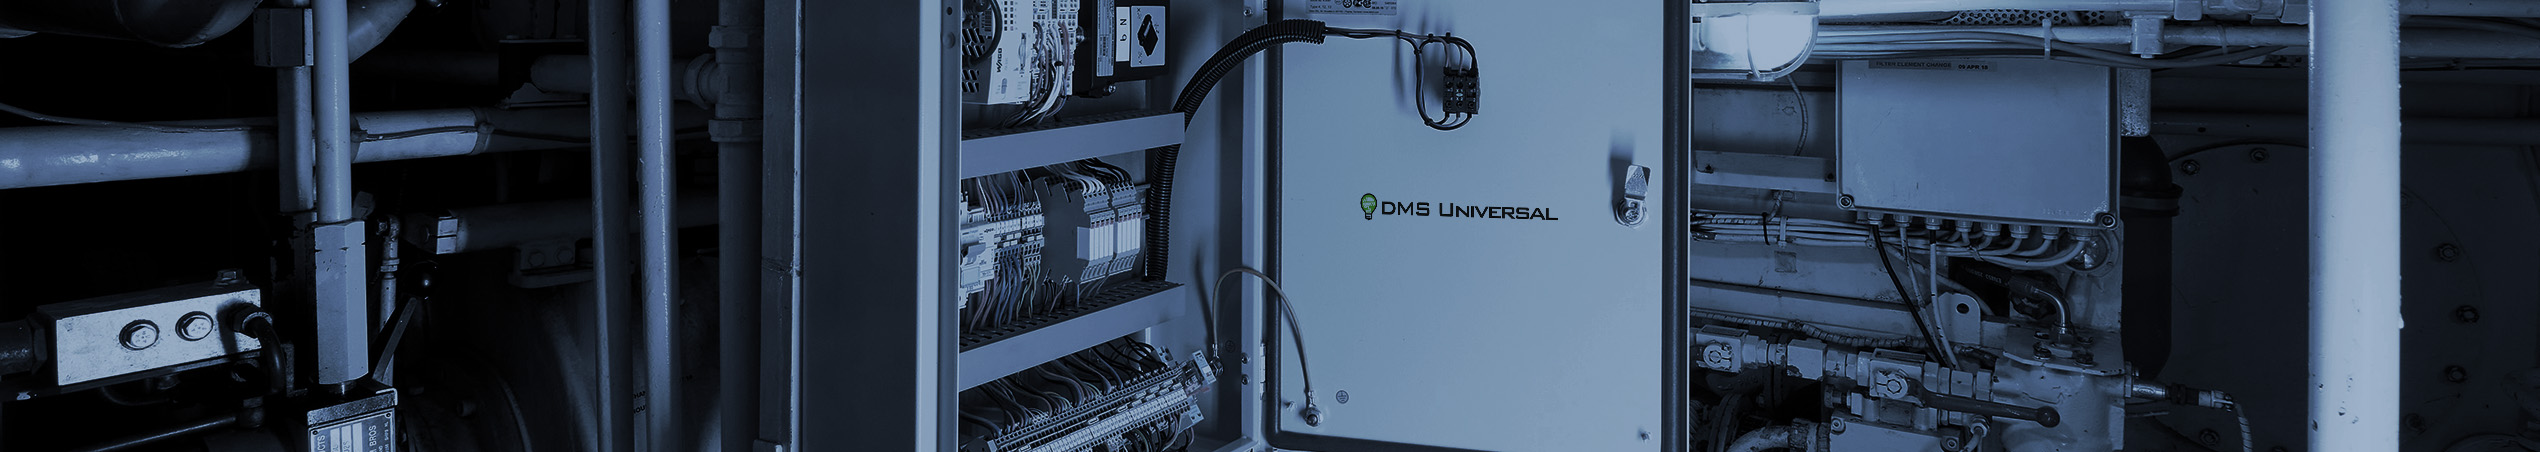 DMS-Universal-operting-system-banner